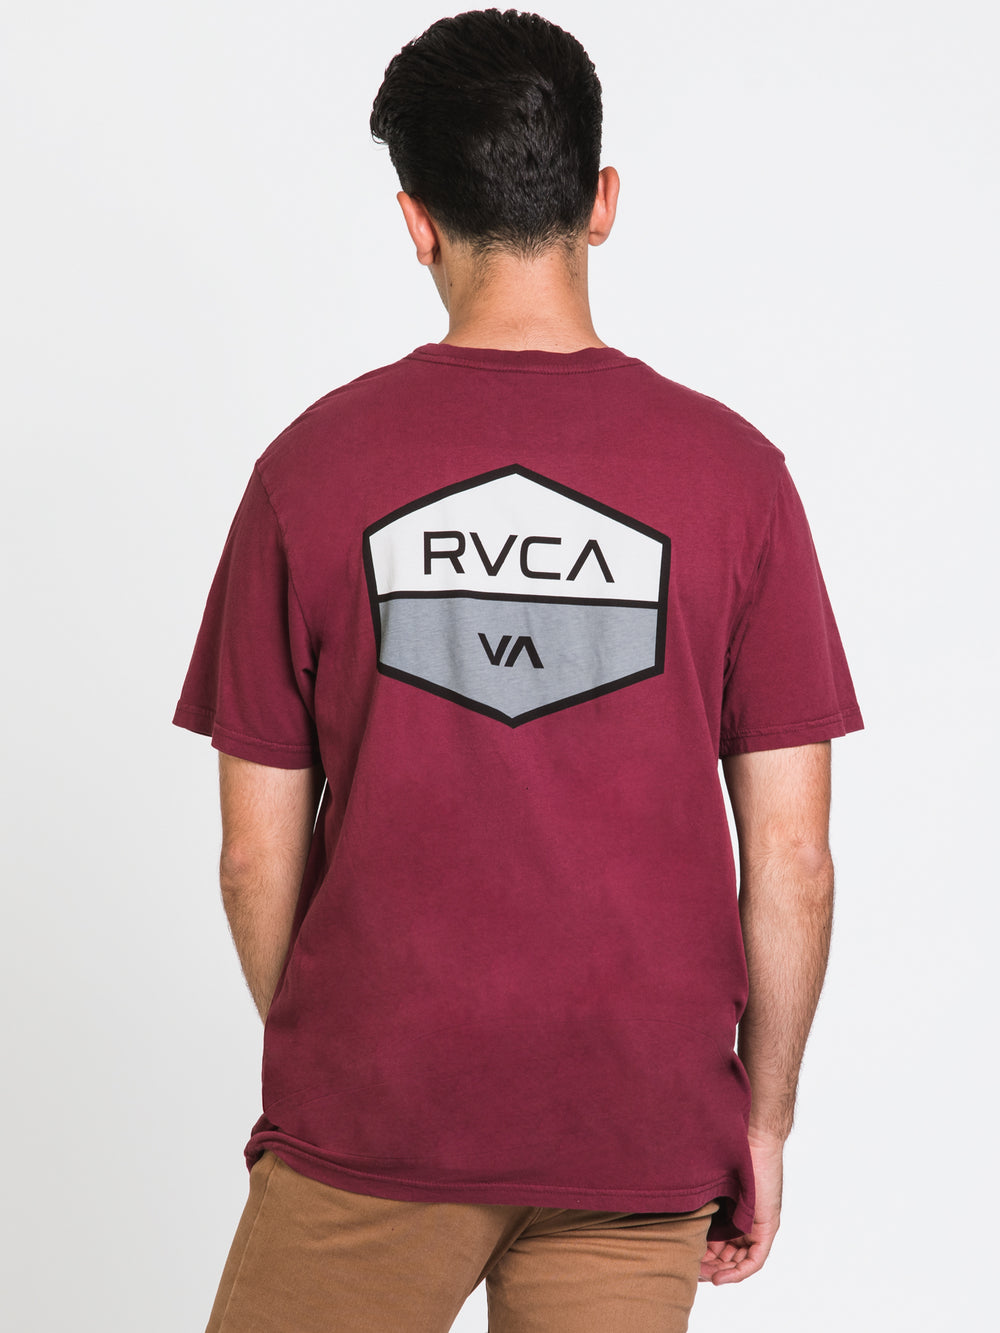 RVCA VA UNIVERSAL HEX T-SHIRT - CLEARANCE